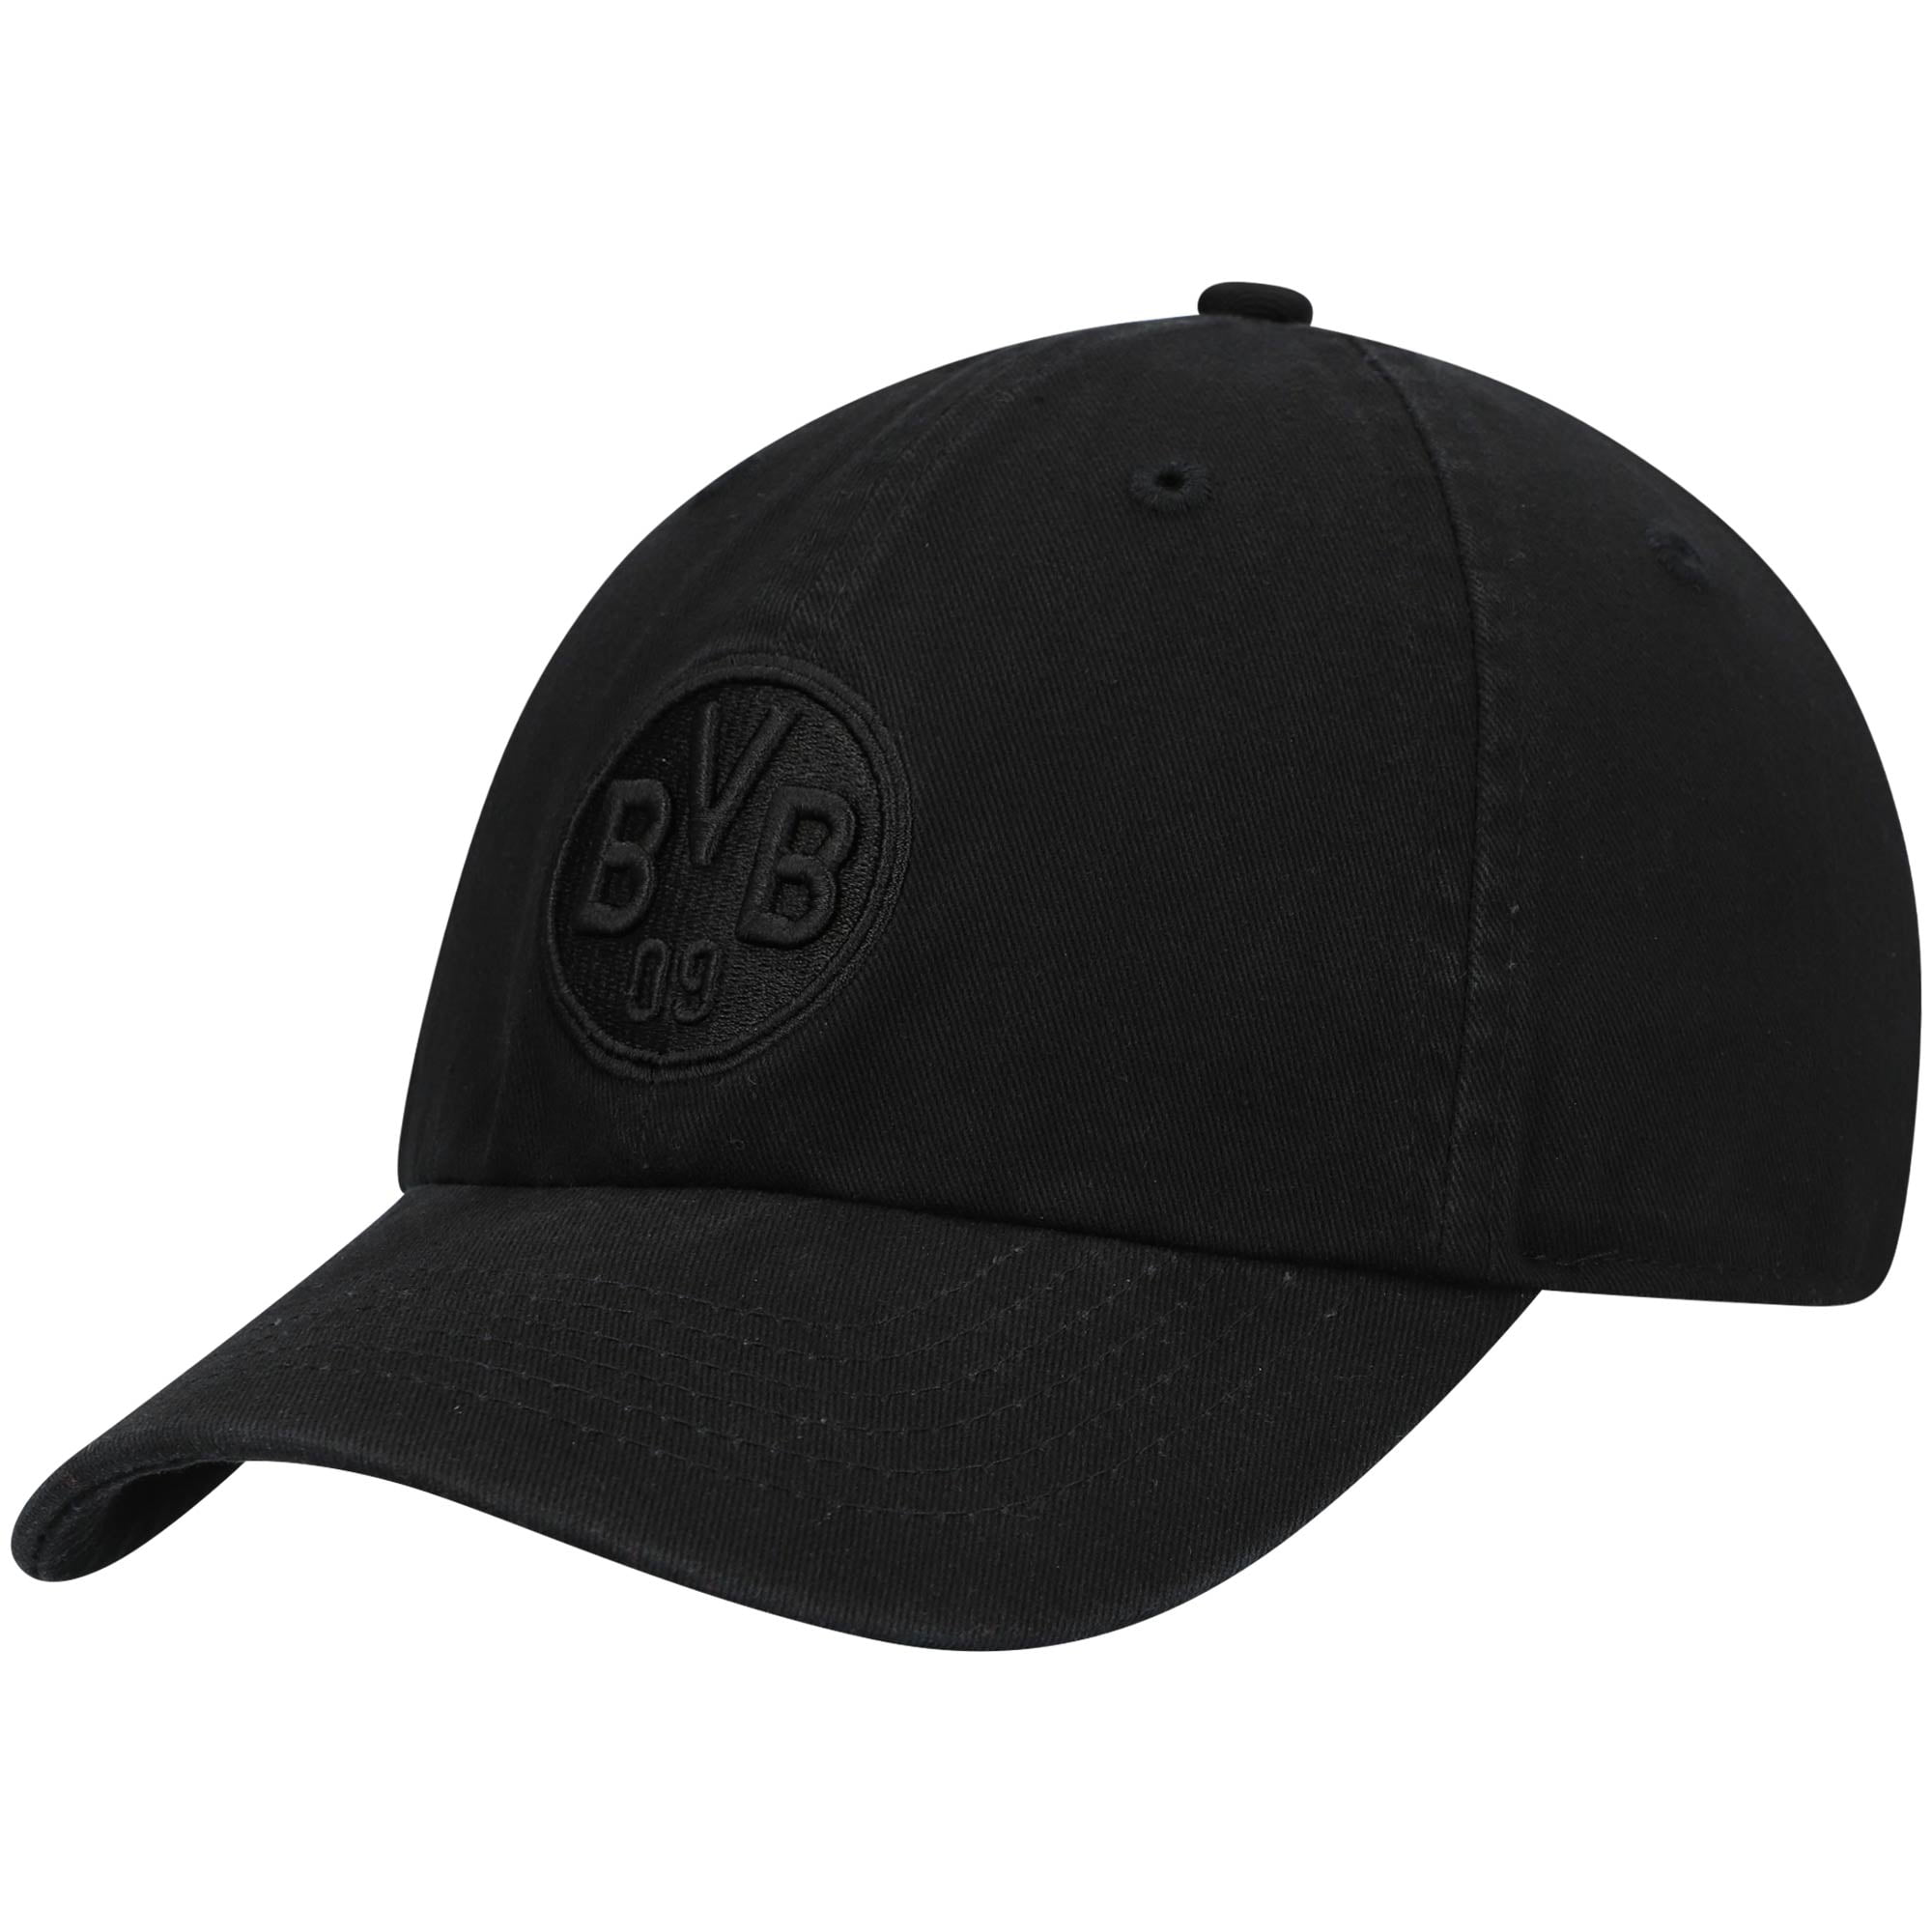 FI COLLECTION Borussia Dortmund Bambo Classic Adjustable Dad Hat Black 